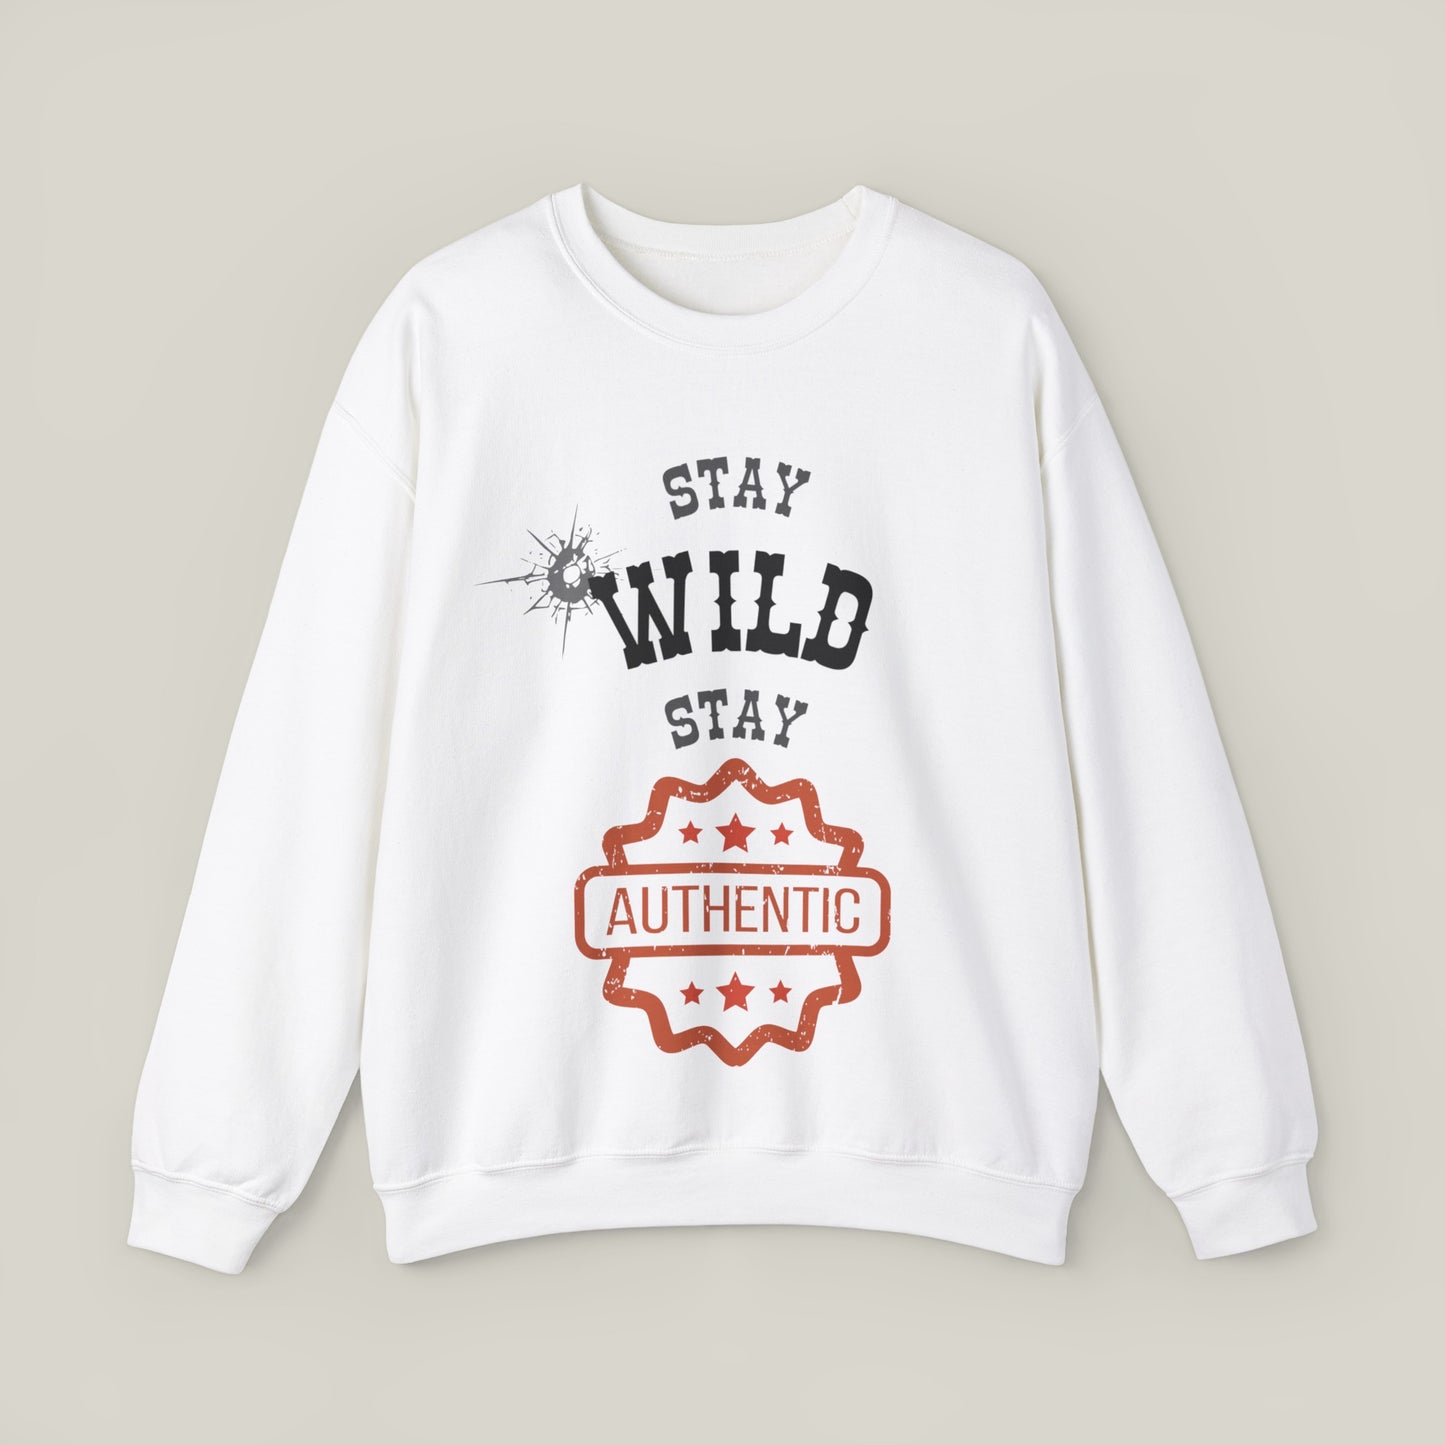 Stay Authentic - Sweatshirt Unisex